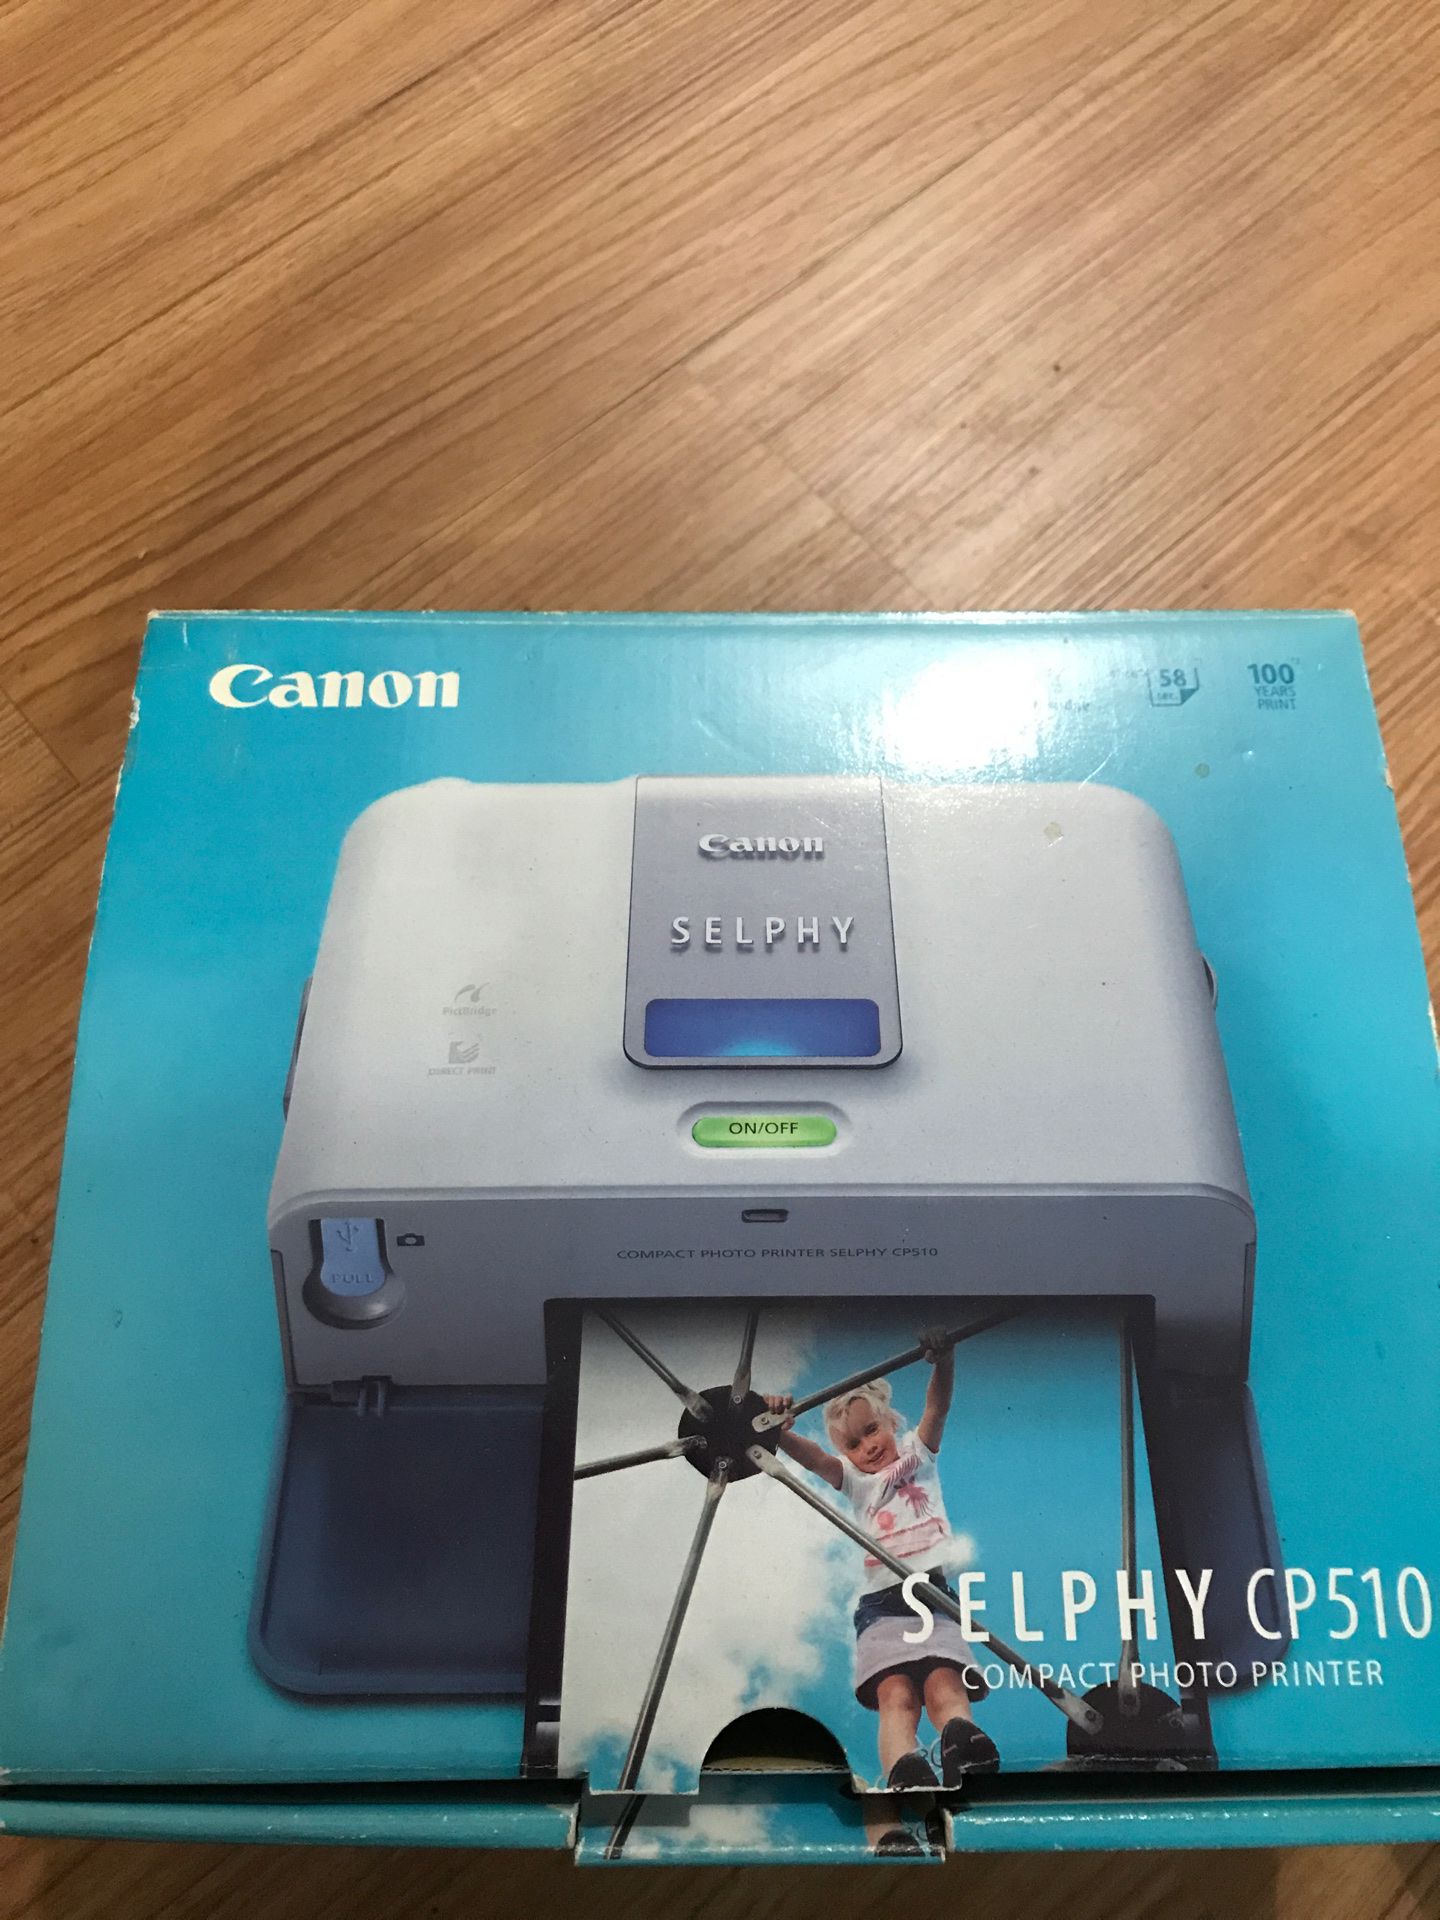 Canon digital camera and photo printer